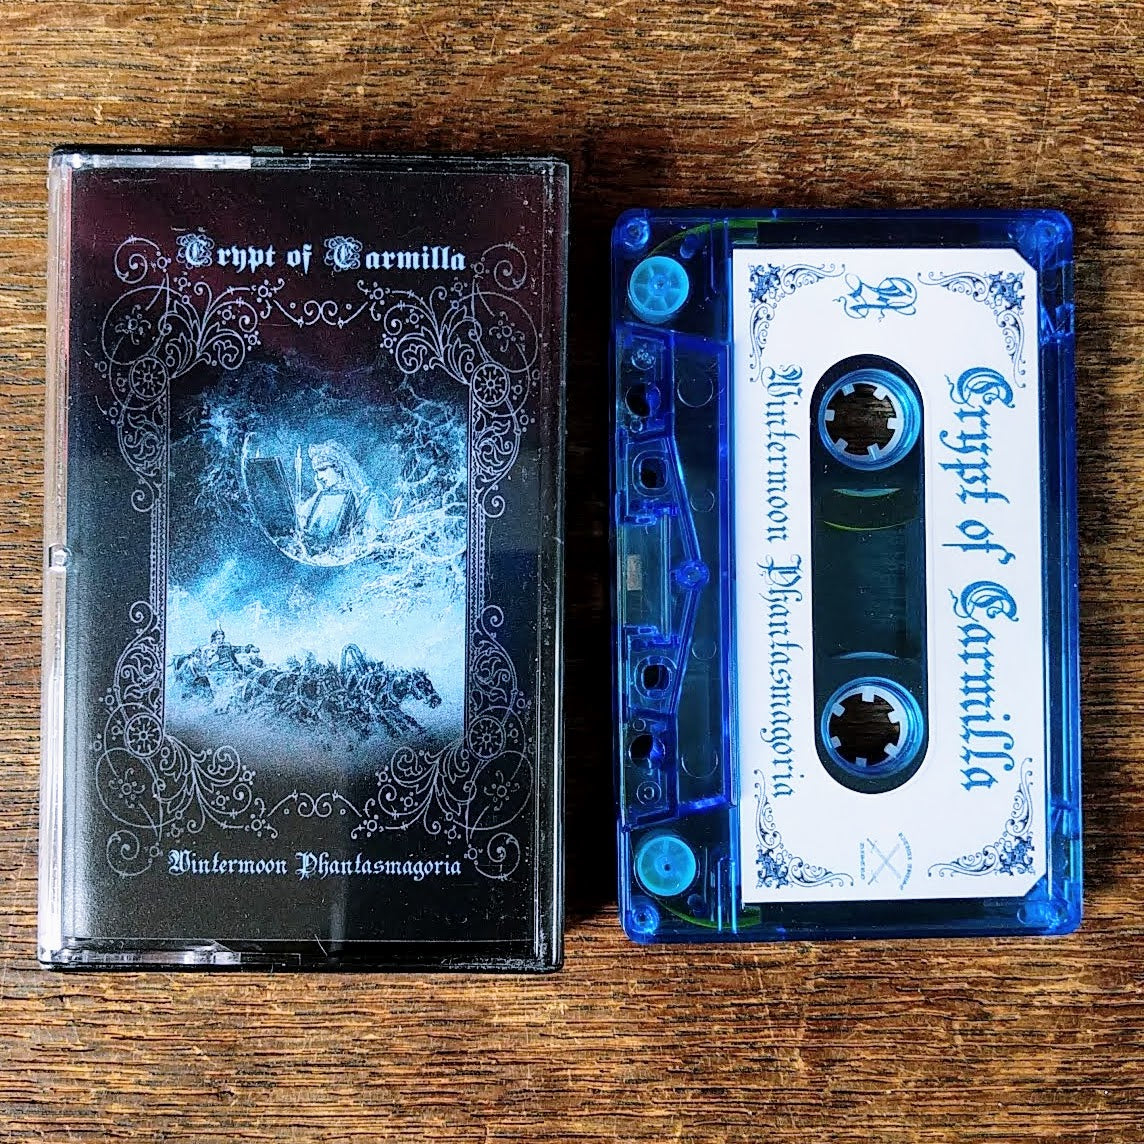 [SOLD OUT] CRYPT OF CARMILLA "Wintermoon Phantasmagoria" Cassette Tape